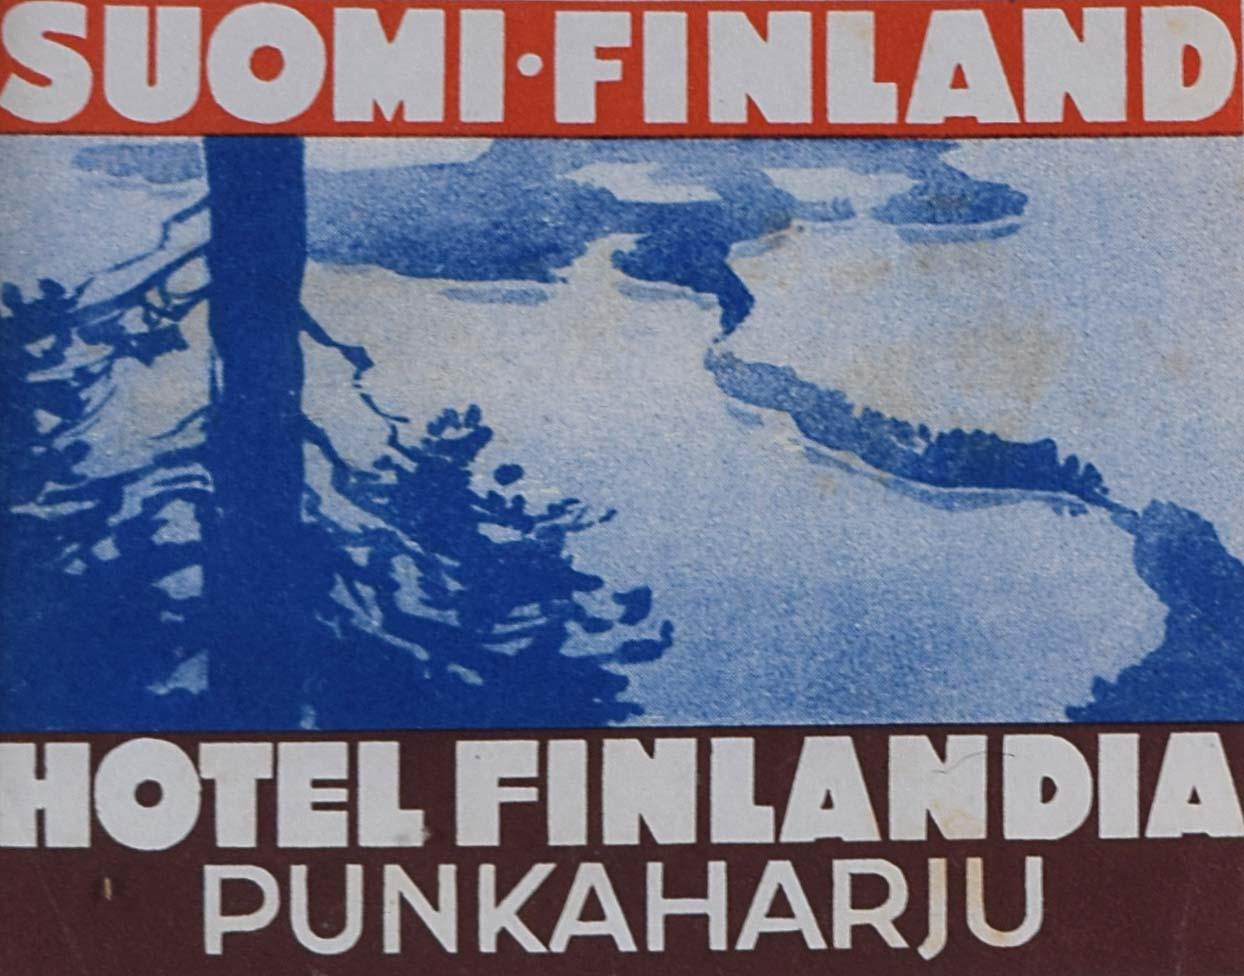 Hotel Finlandia Punkaharju Suomi Finland Original Vintage Luggage Label